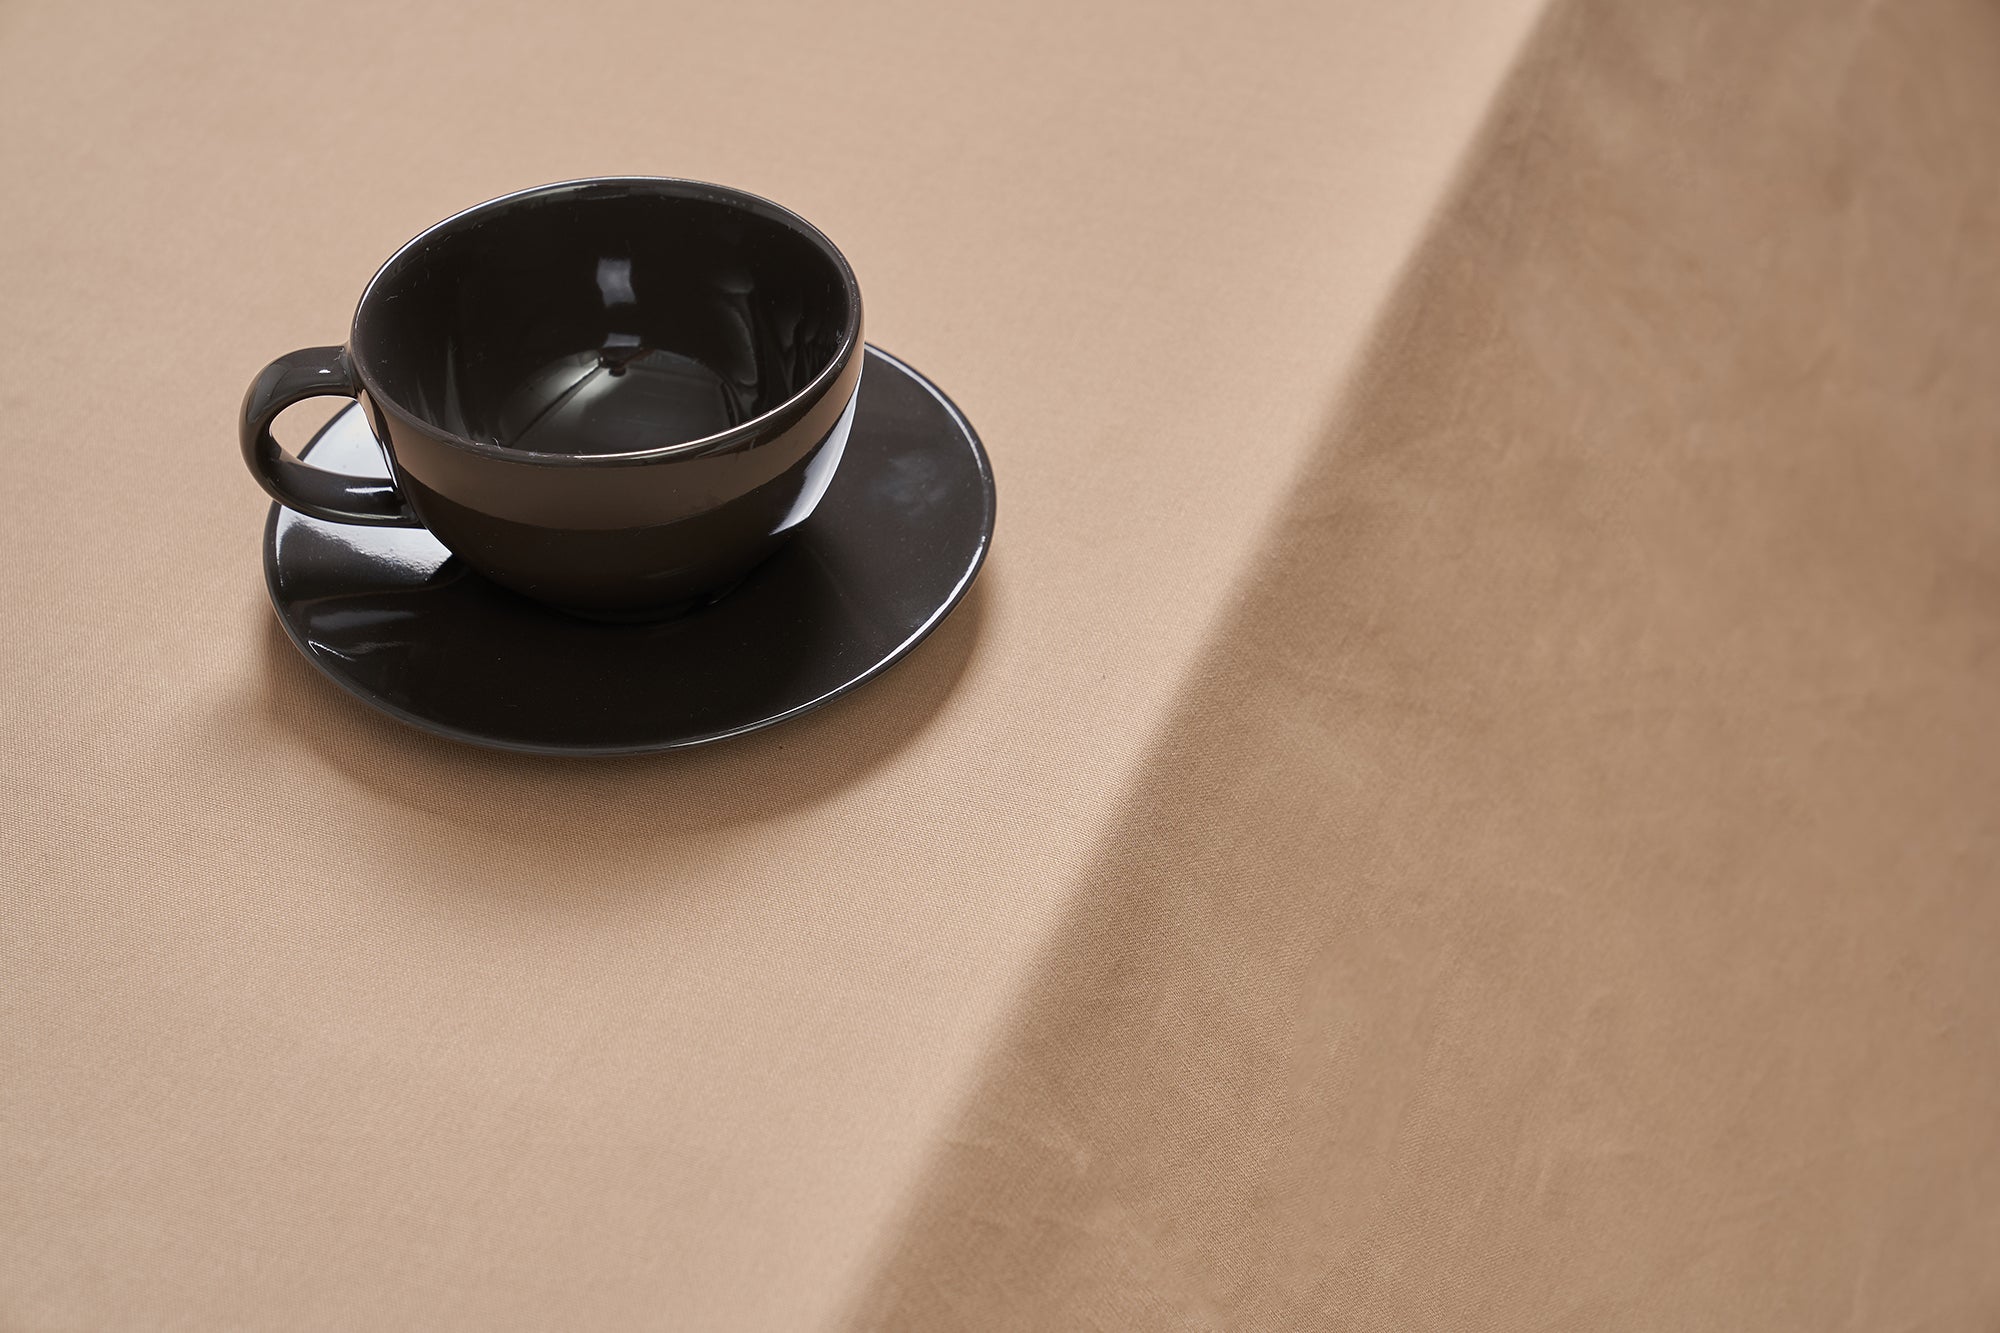 Han&Co. Table Cloth – Cookie Cream ผ้าปูโต๊ะ ผ้าคลุมโต๊ะ สี Cookie Cream HCTCB07